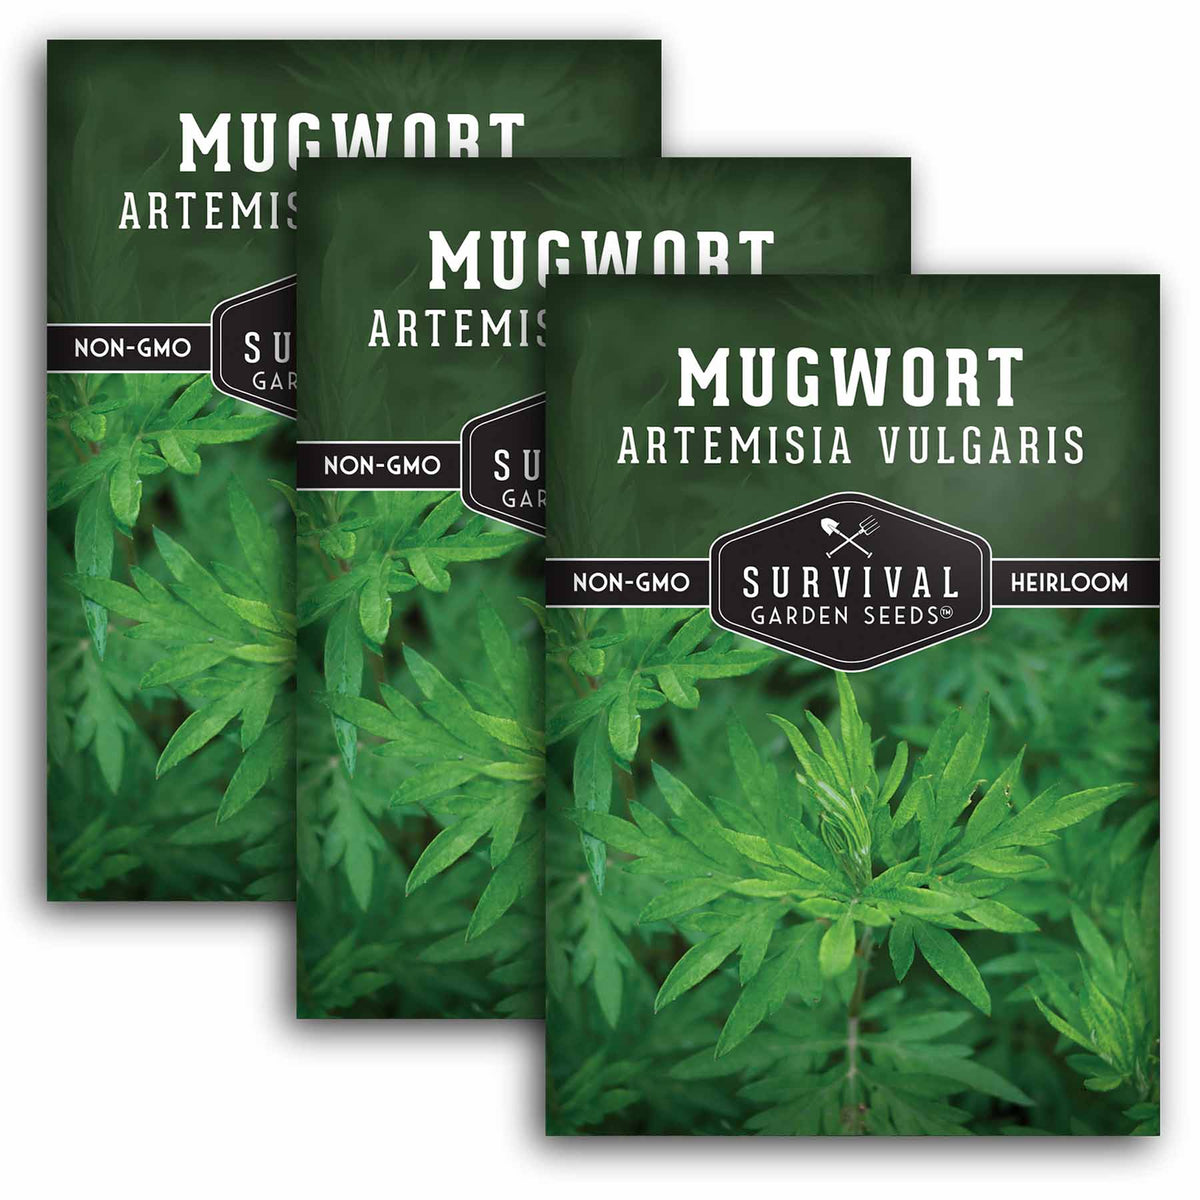 3 packets of Mugwort seeds